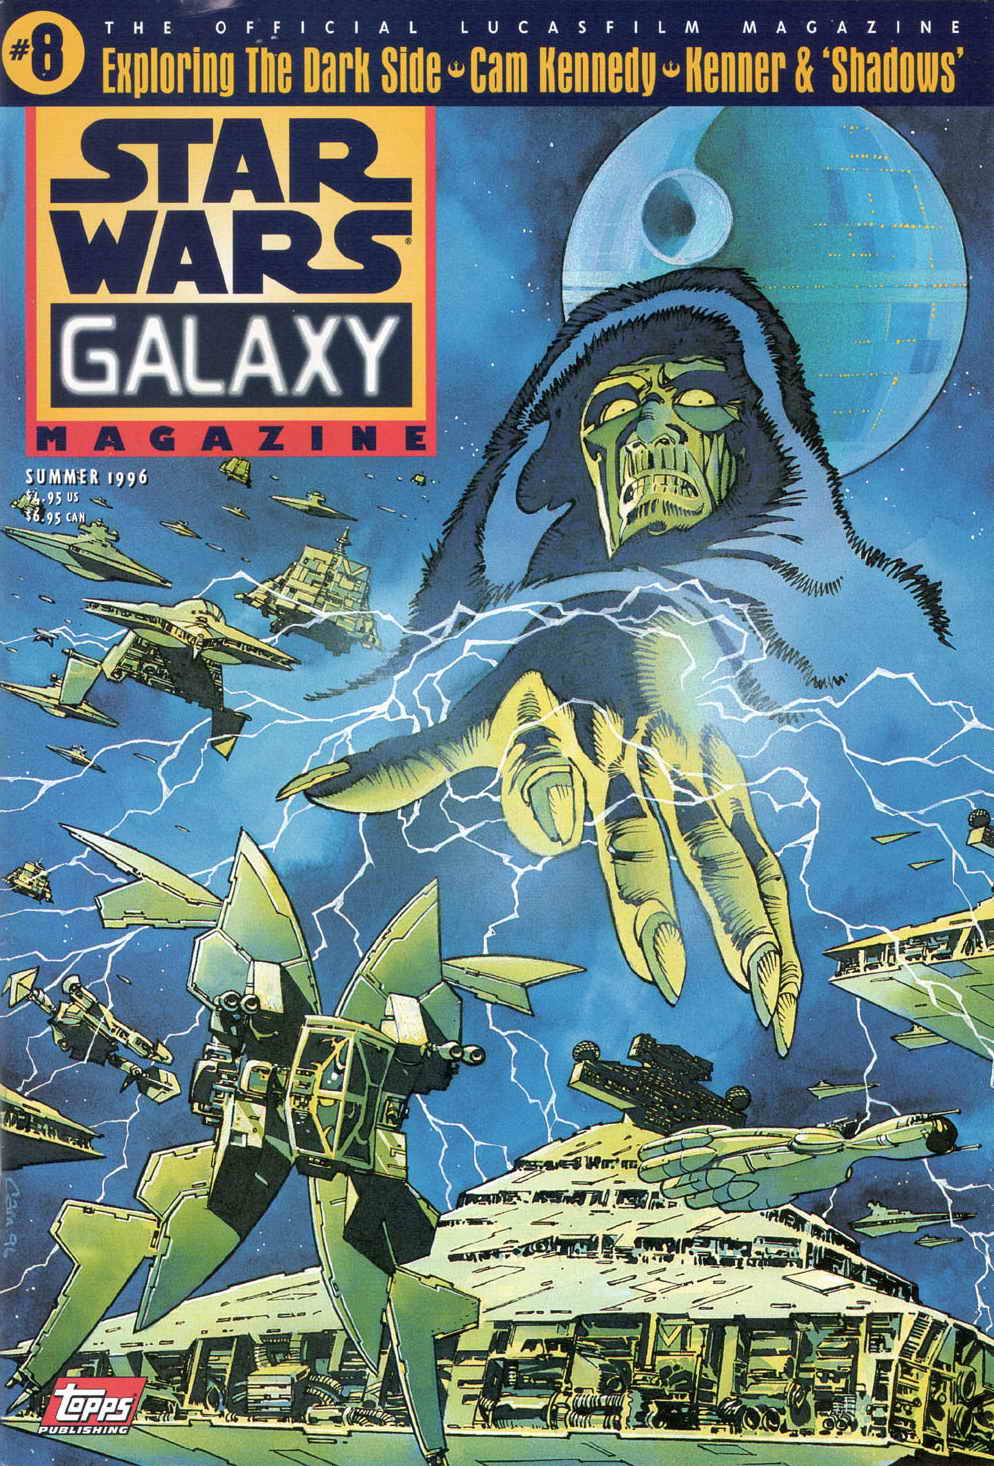 Star Wars Galaxy Magazine 8